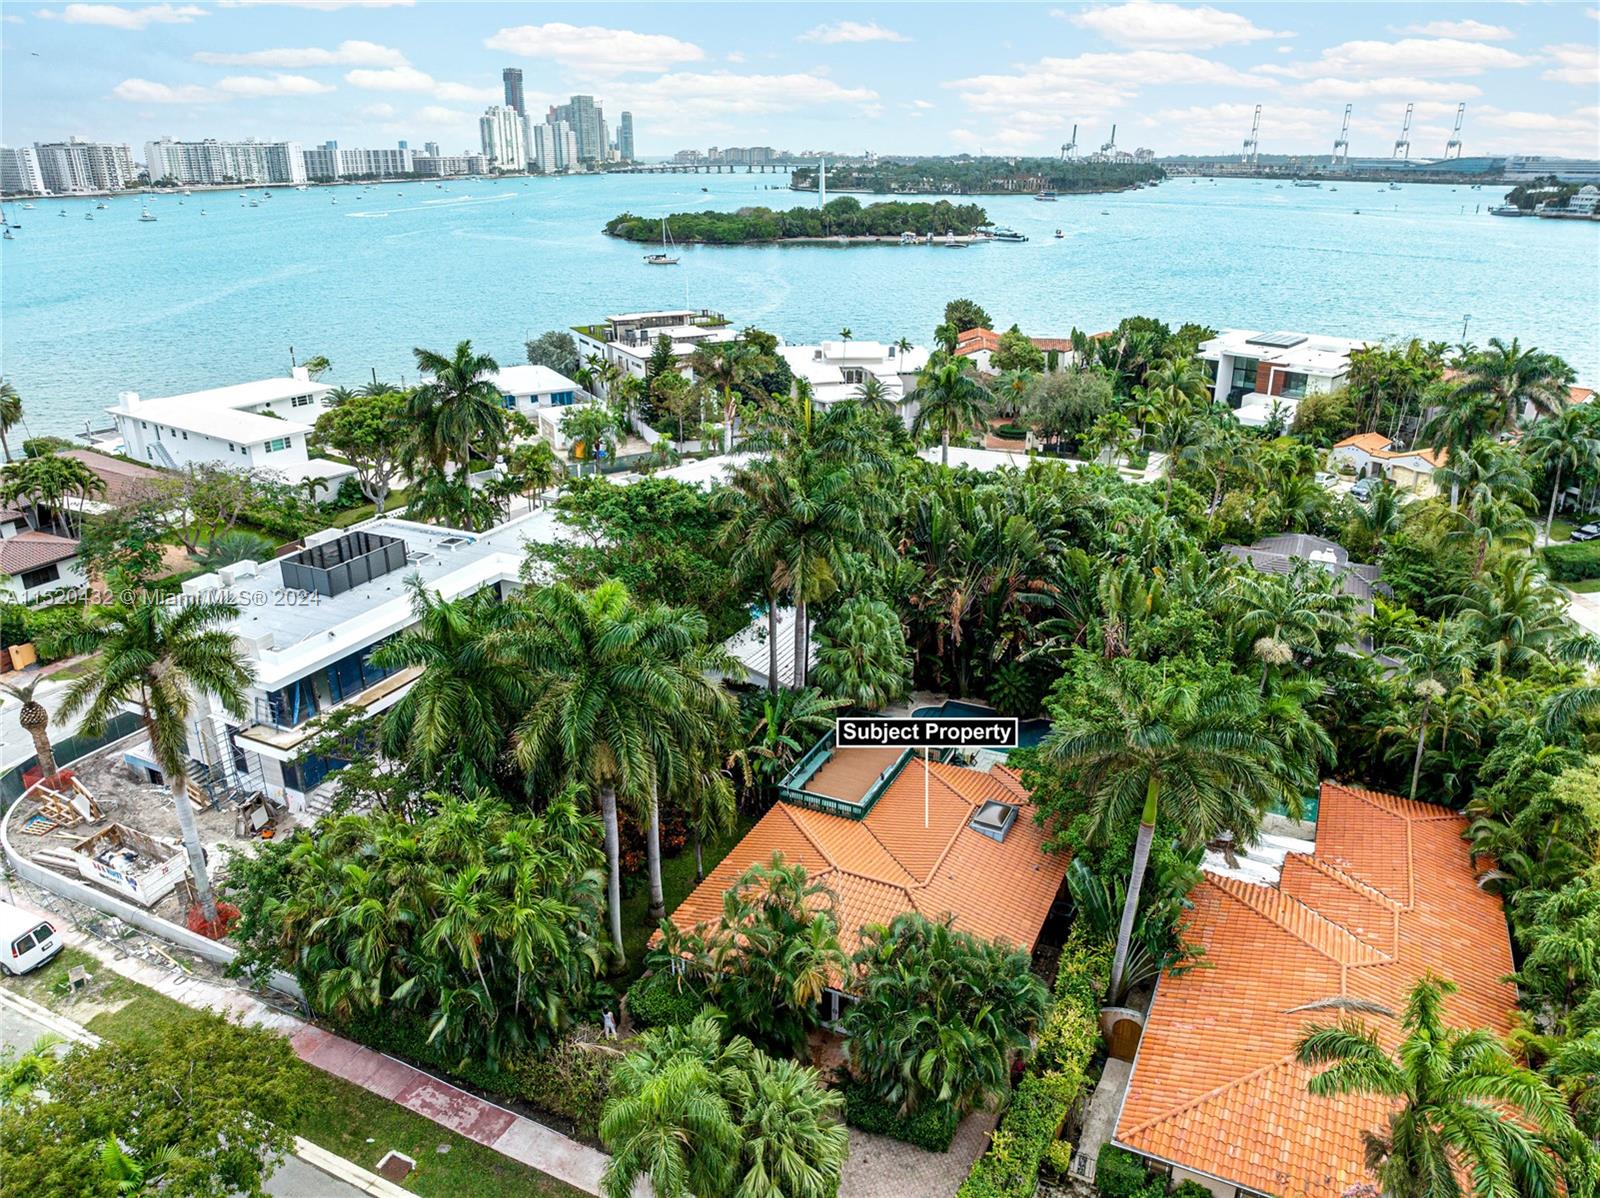 Property for Sale at 114 1st Rivo Alto Ter Ter, Miami Beach, Miami-Dade County, Florida - Bedrooms: 3 
Bathrooms: 3  - $4,295,000